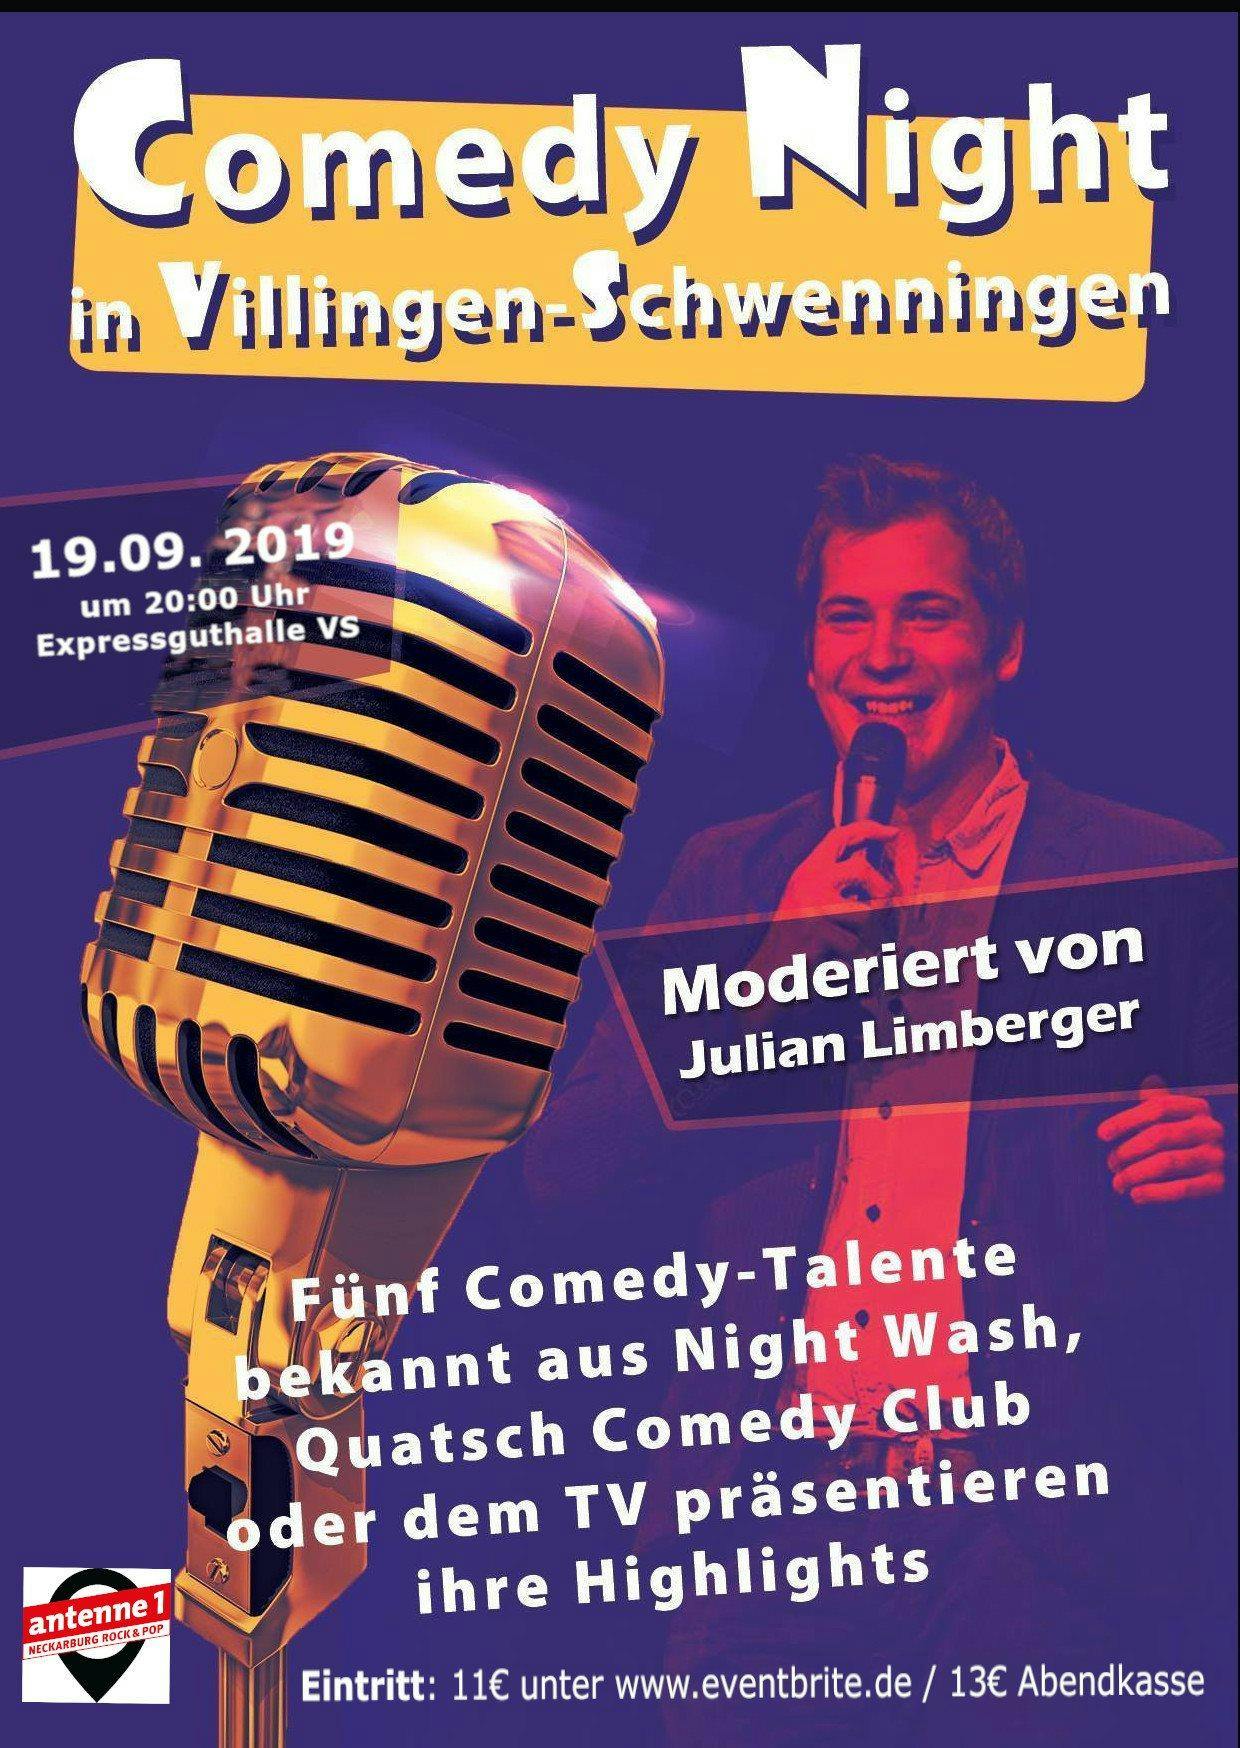 Comedy Night in Villingen-Schwenningen